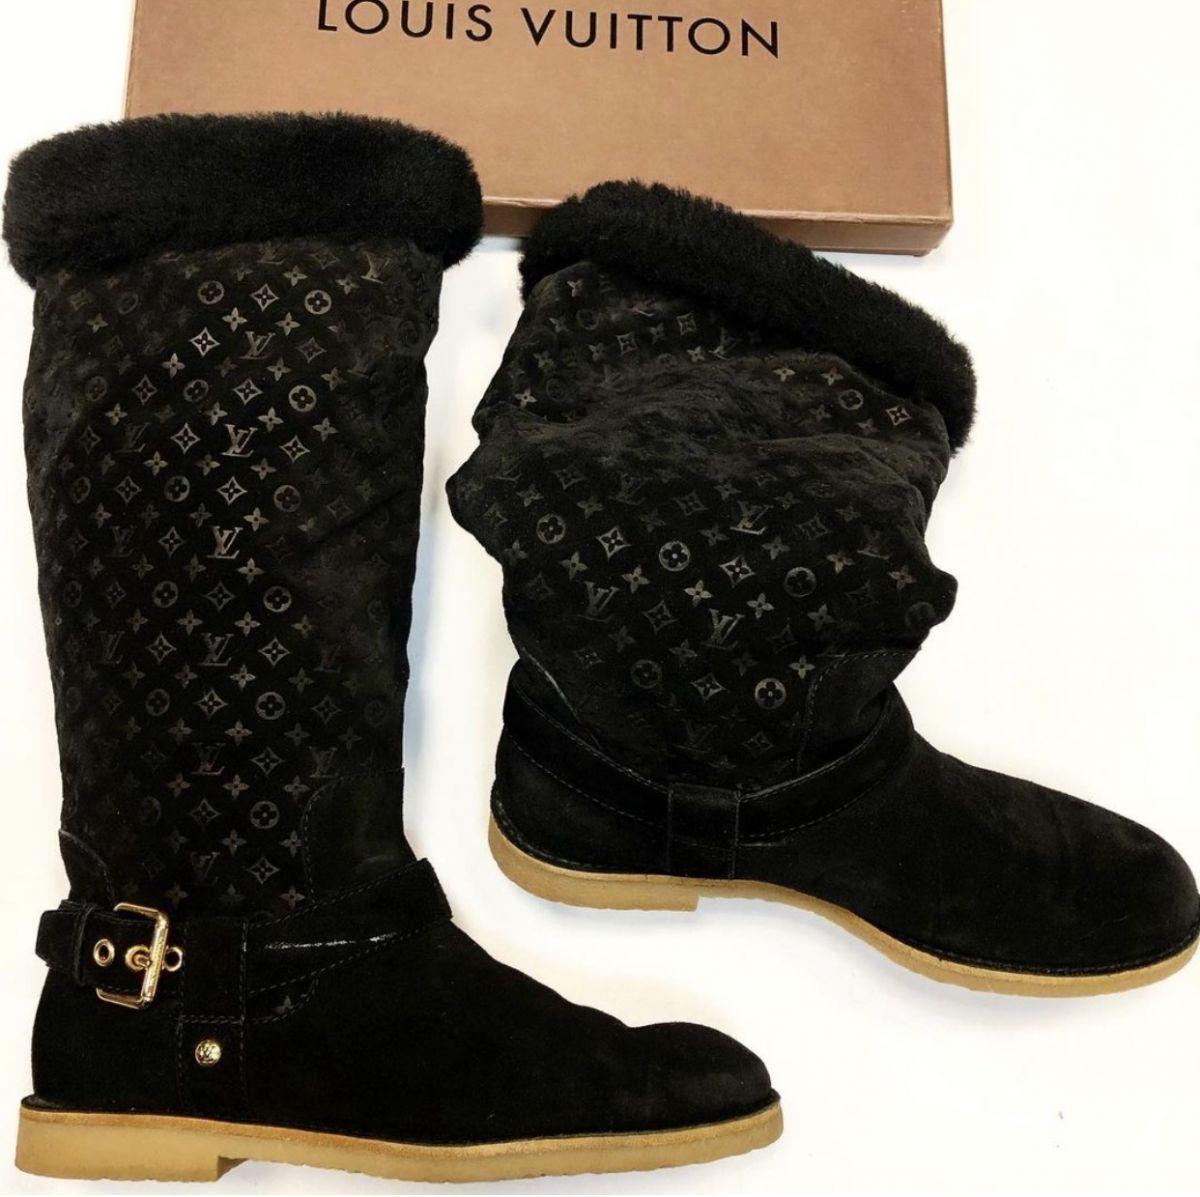 Сапоги замшевые/зимние Louis Vuitton  размер 39.1/2 цена 15 385 руб